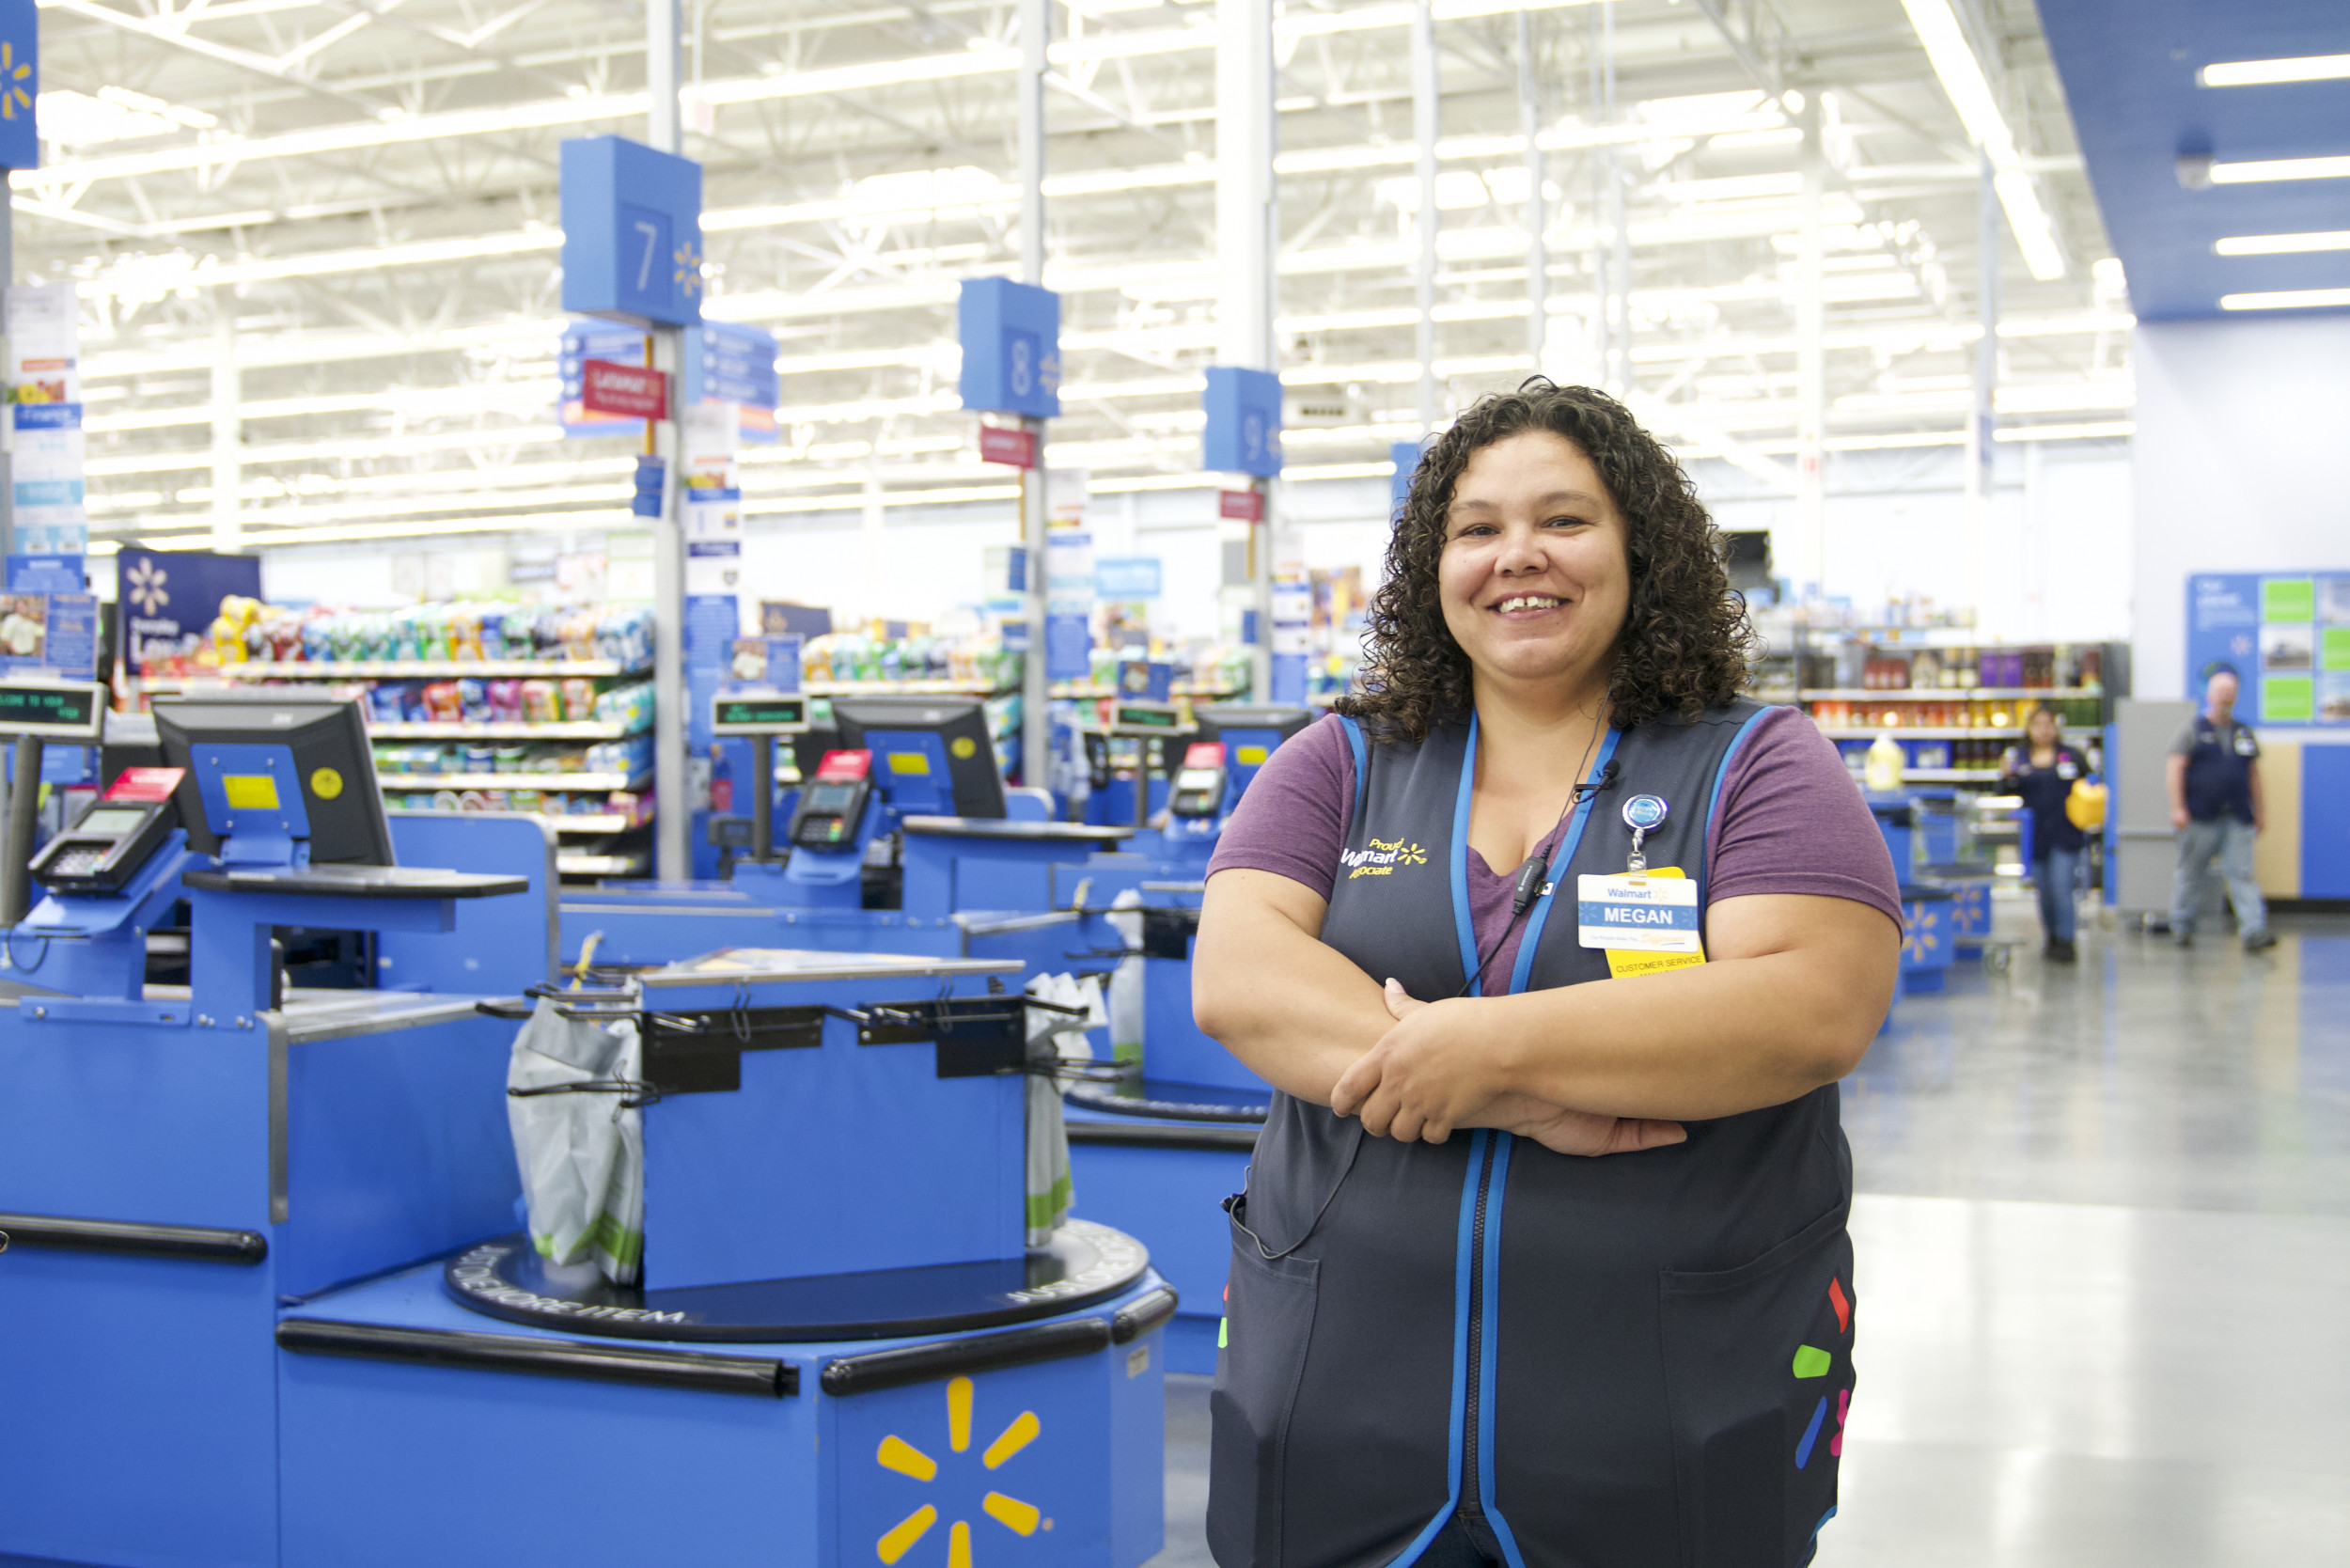 Black Friday Deals: Walmart vs. Target Comparison on Consoles, TVs